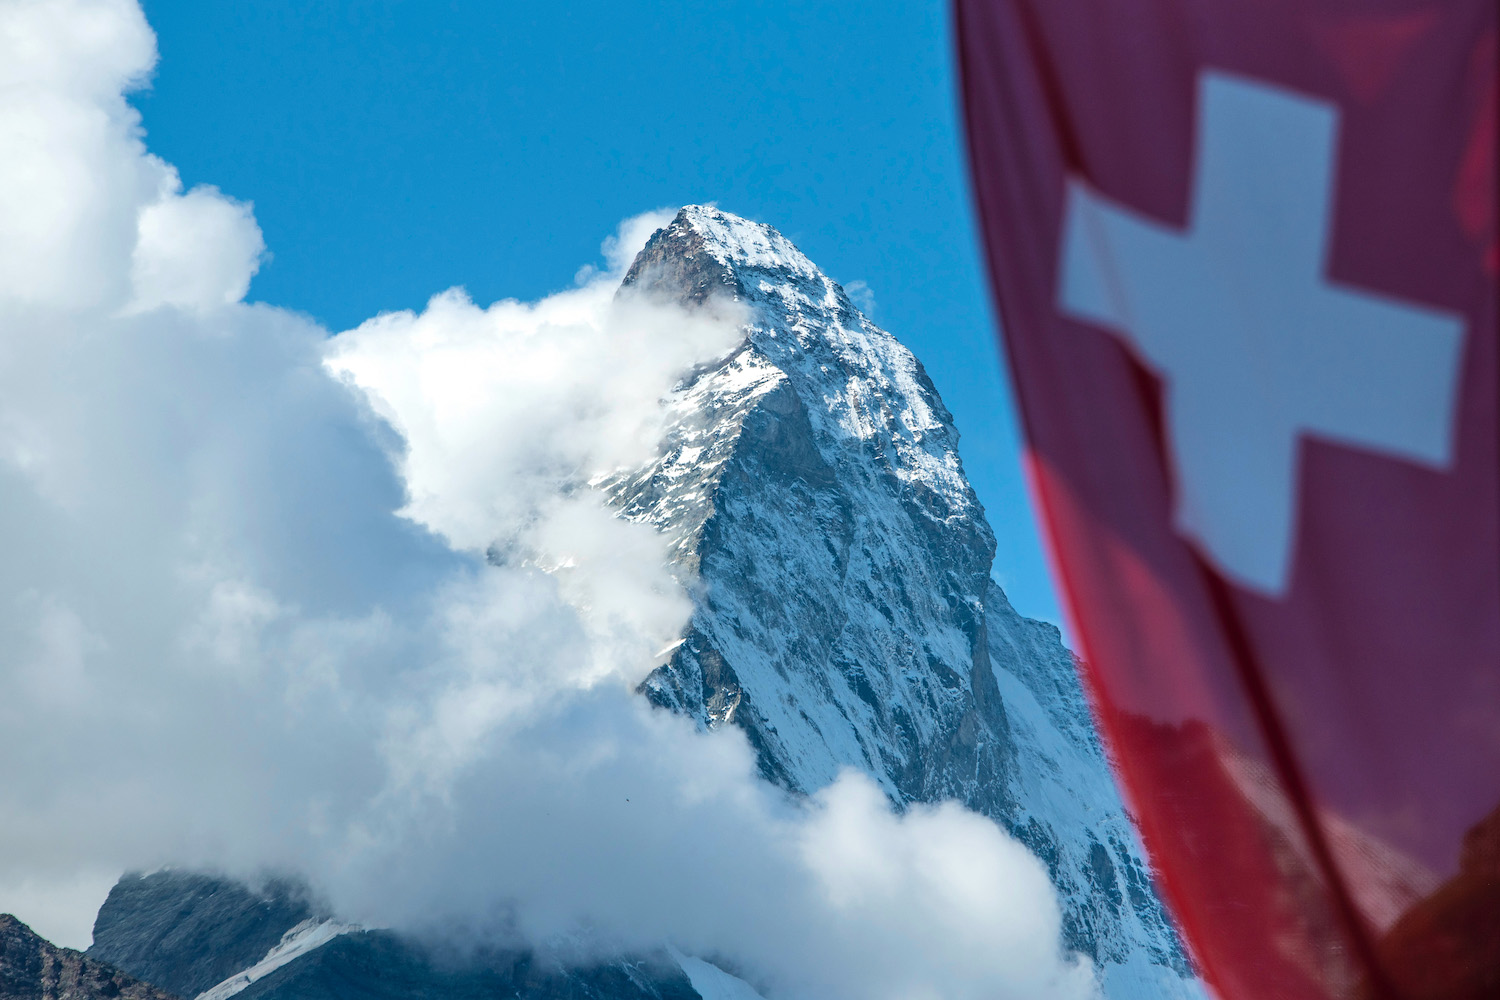 A Guide for the Best Views of the Matterhorn